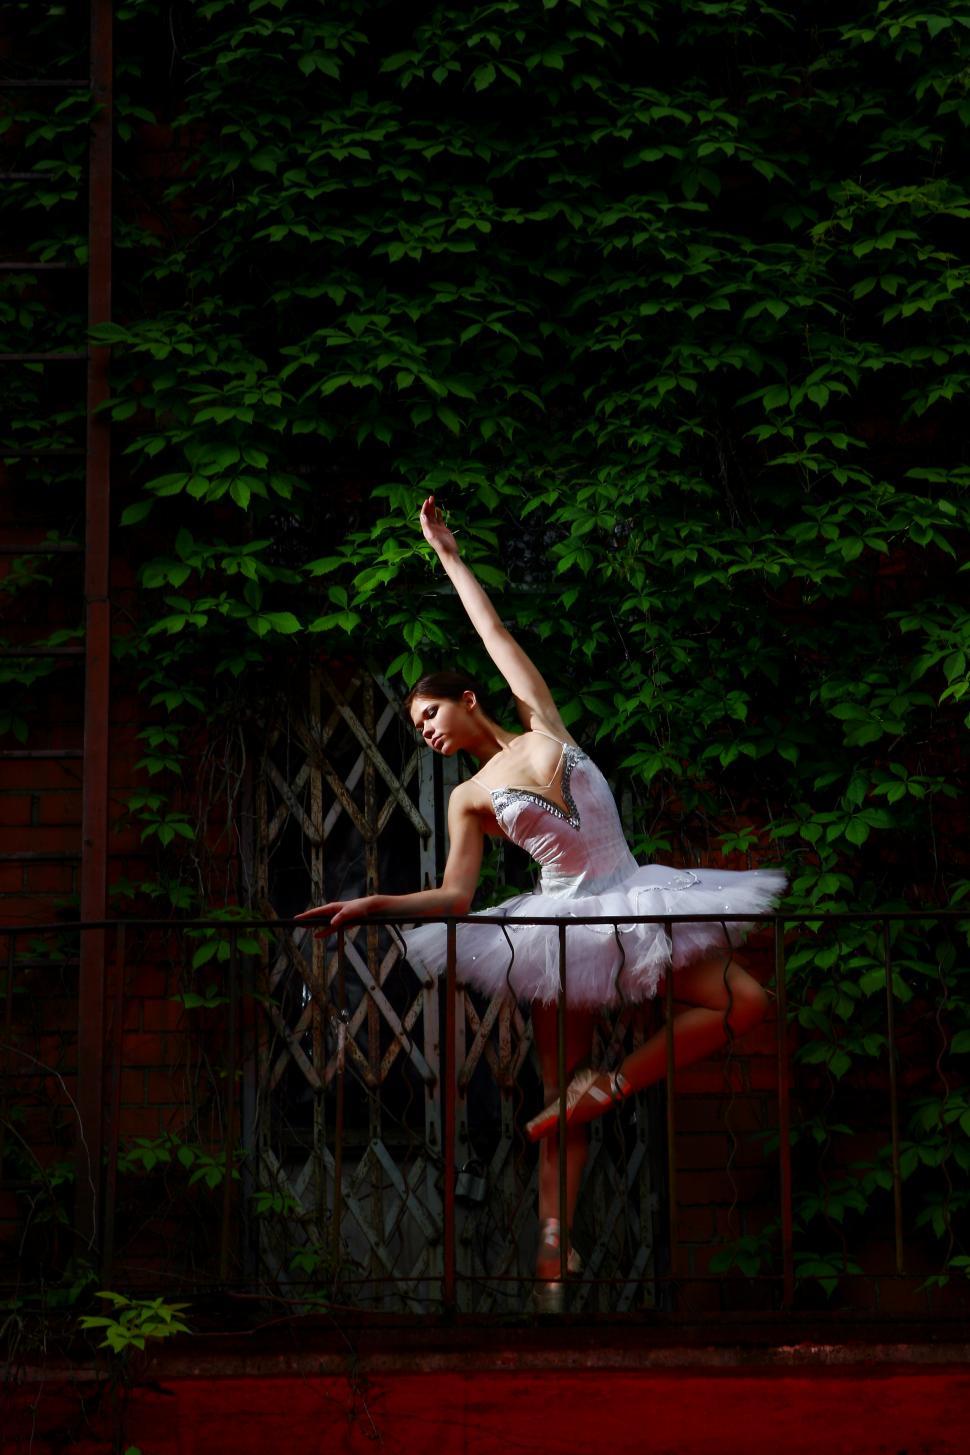 Free Image of ballet dancer on balcony 